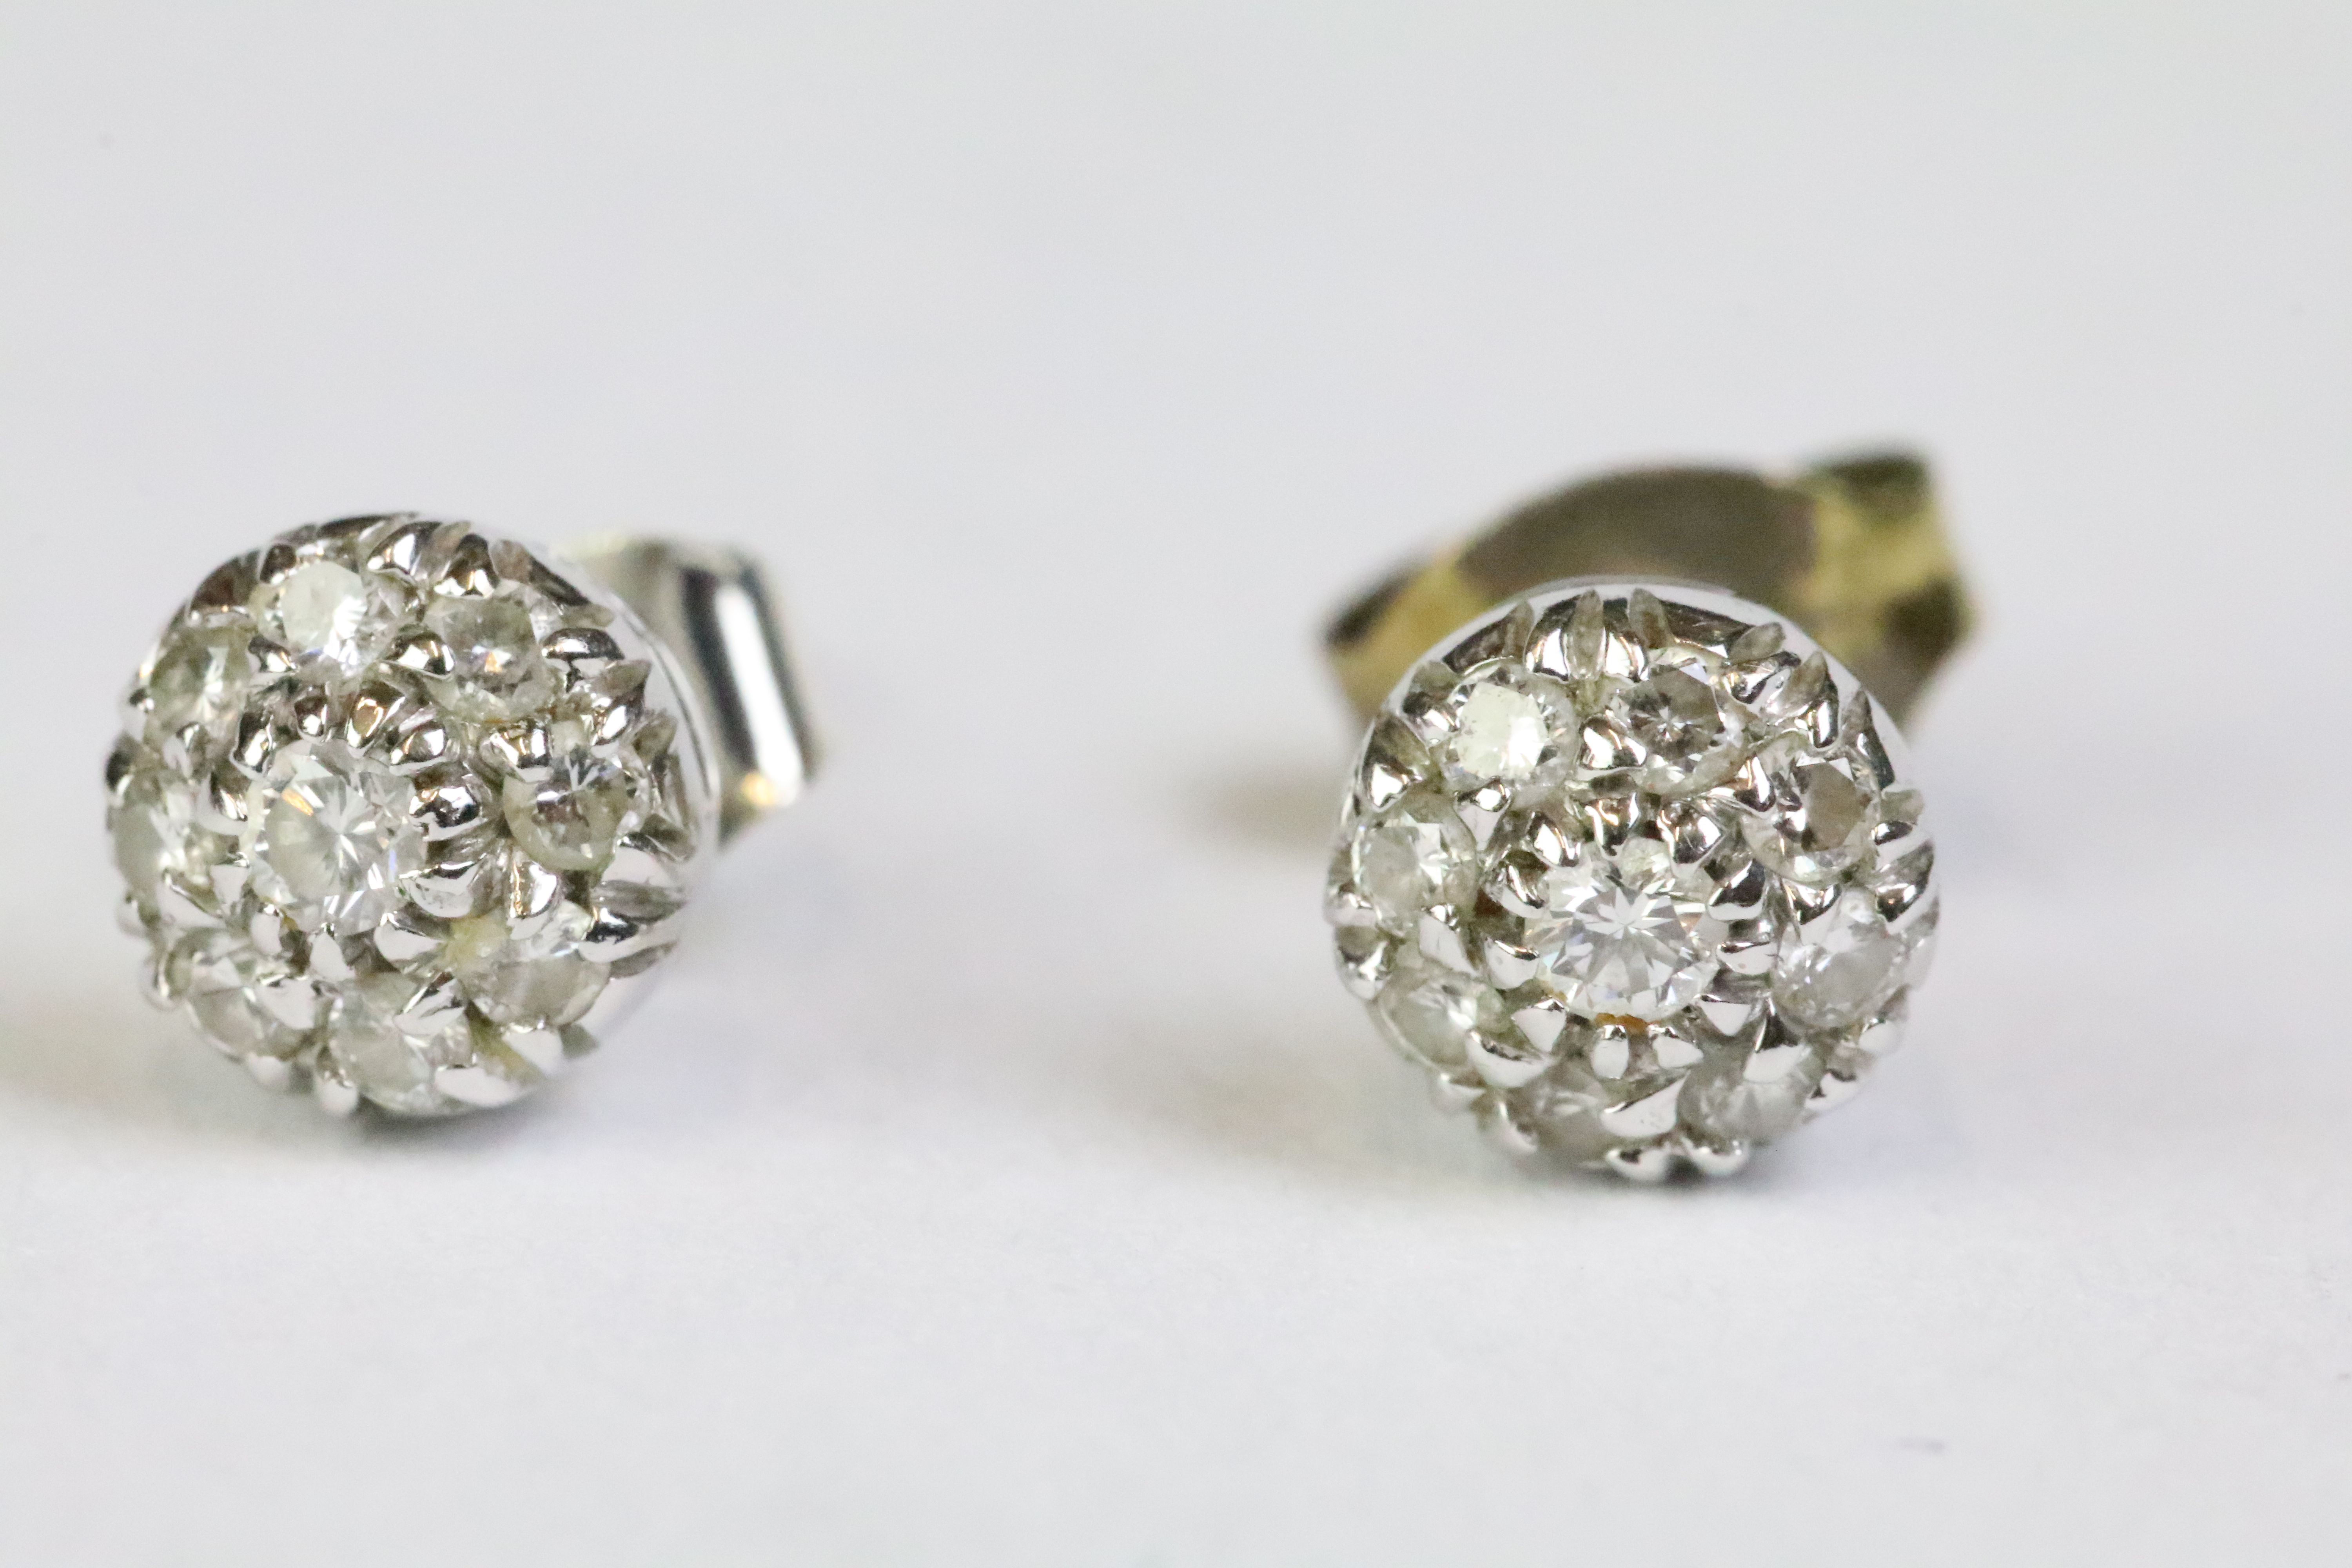 Pair of 14ct white gold diamond stud earrings - Image 3 of 4